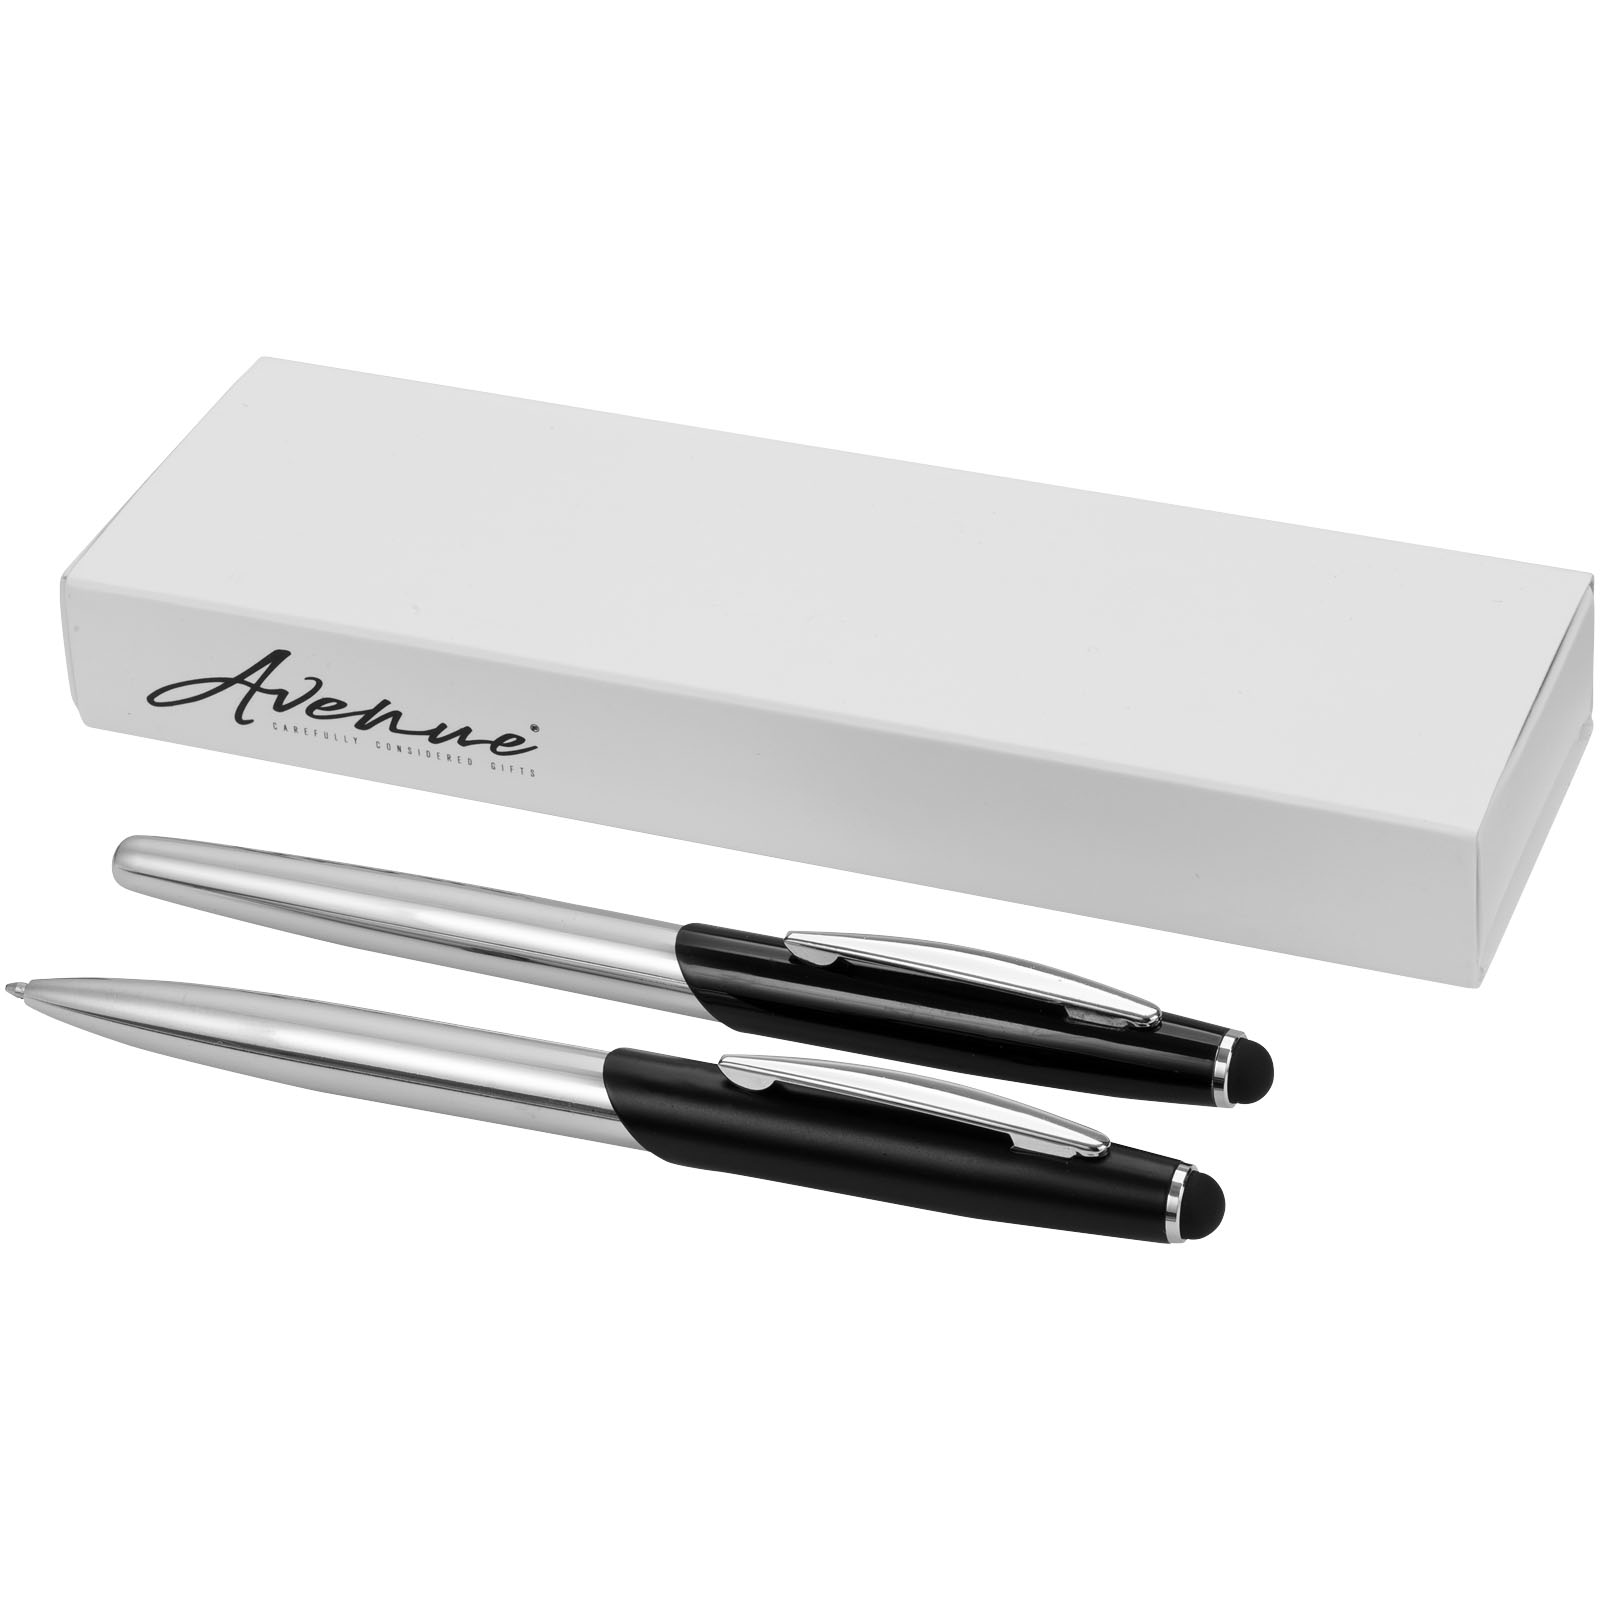 Pens & Writing - Geneva stylus ballpoint pen and rollerball pen set